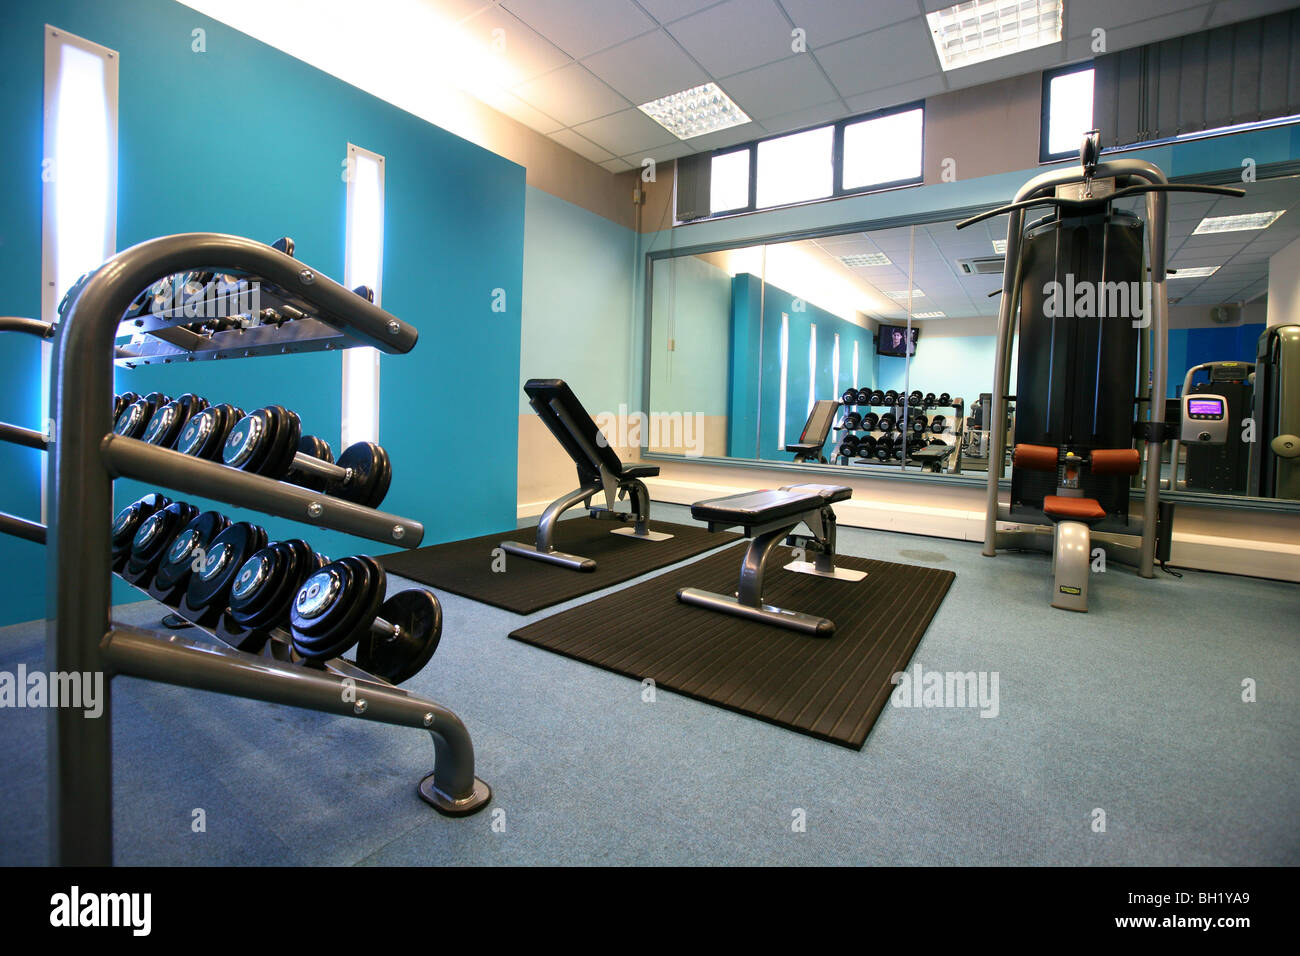 Moderno gimnasio equipado con diversos aparatos de ejercicios Foto de stock